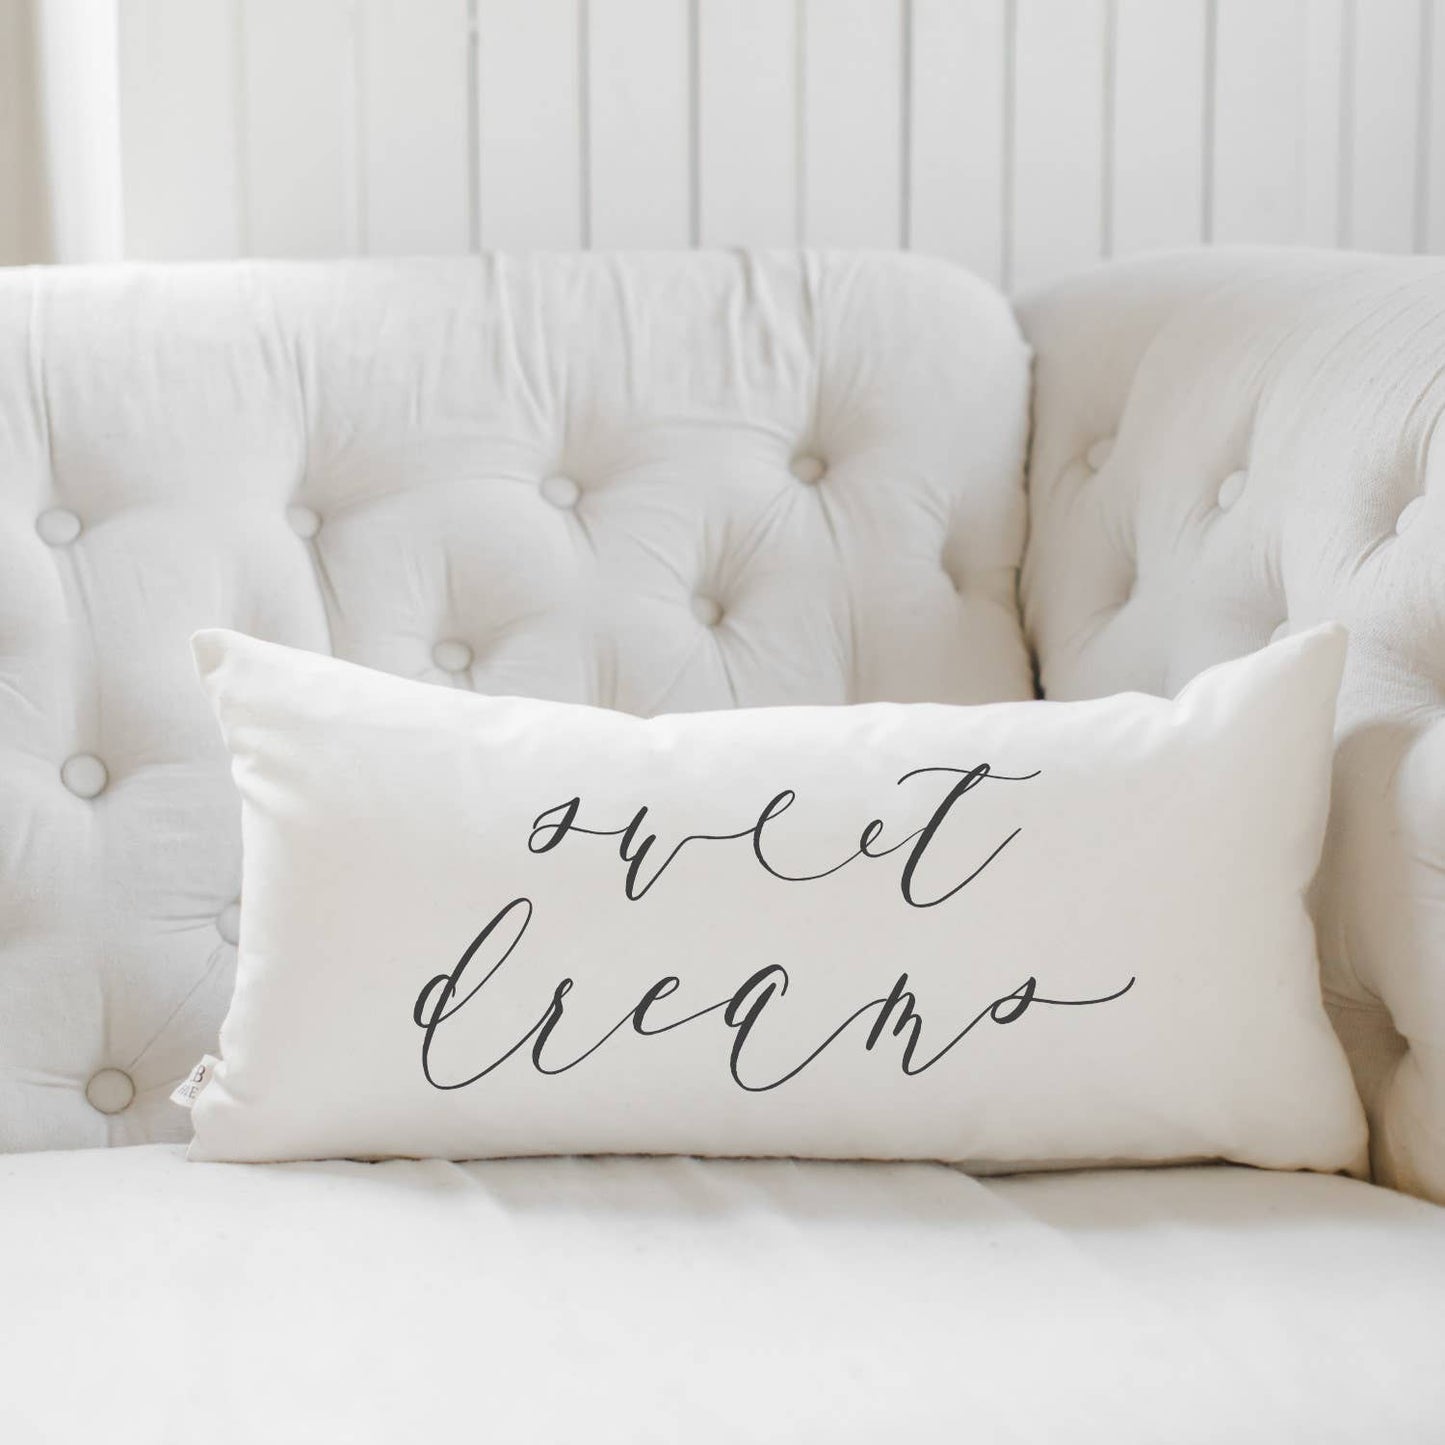 Sweet Dreams Lumbar Pillow Cover